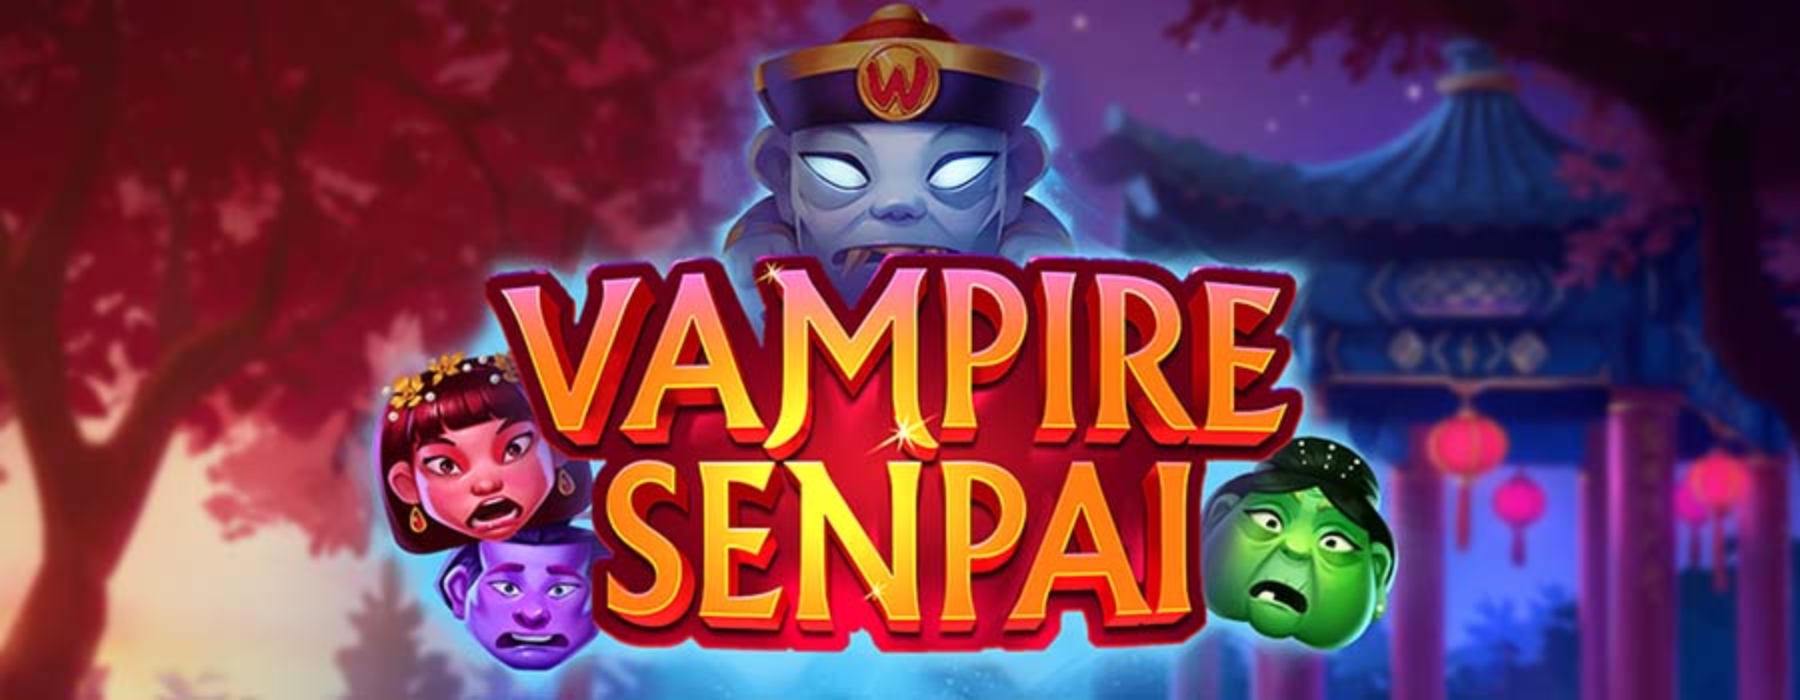 Vampire Senpai demo